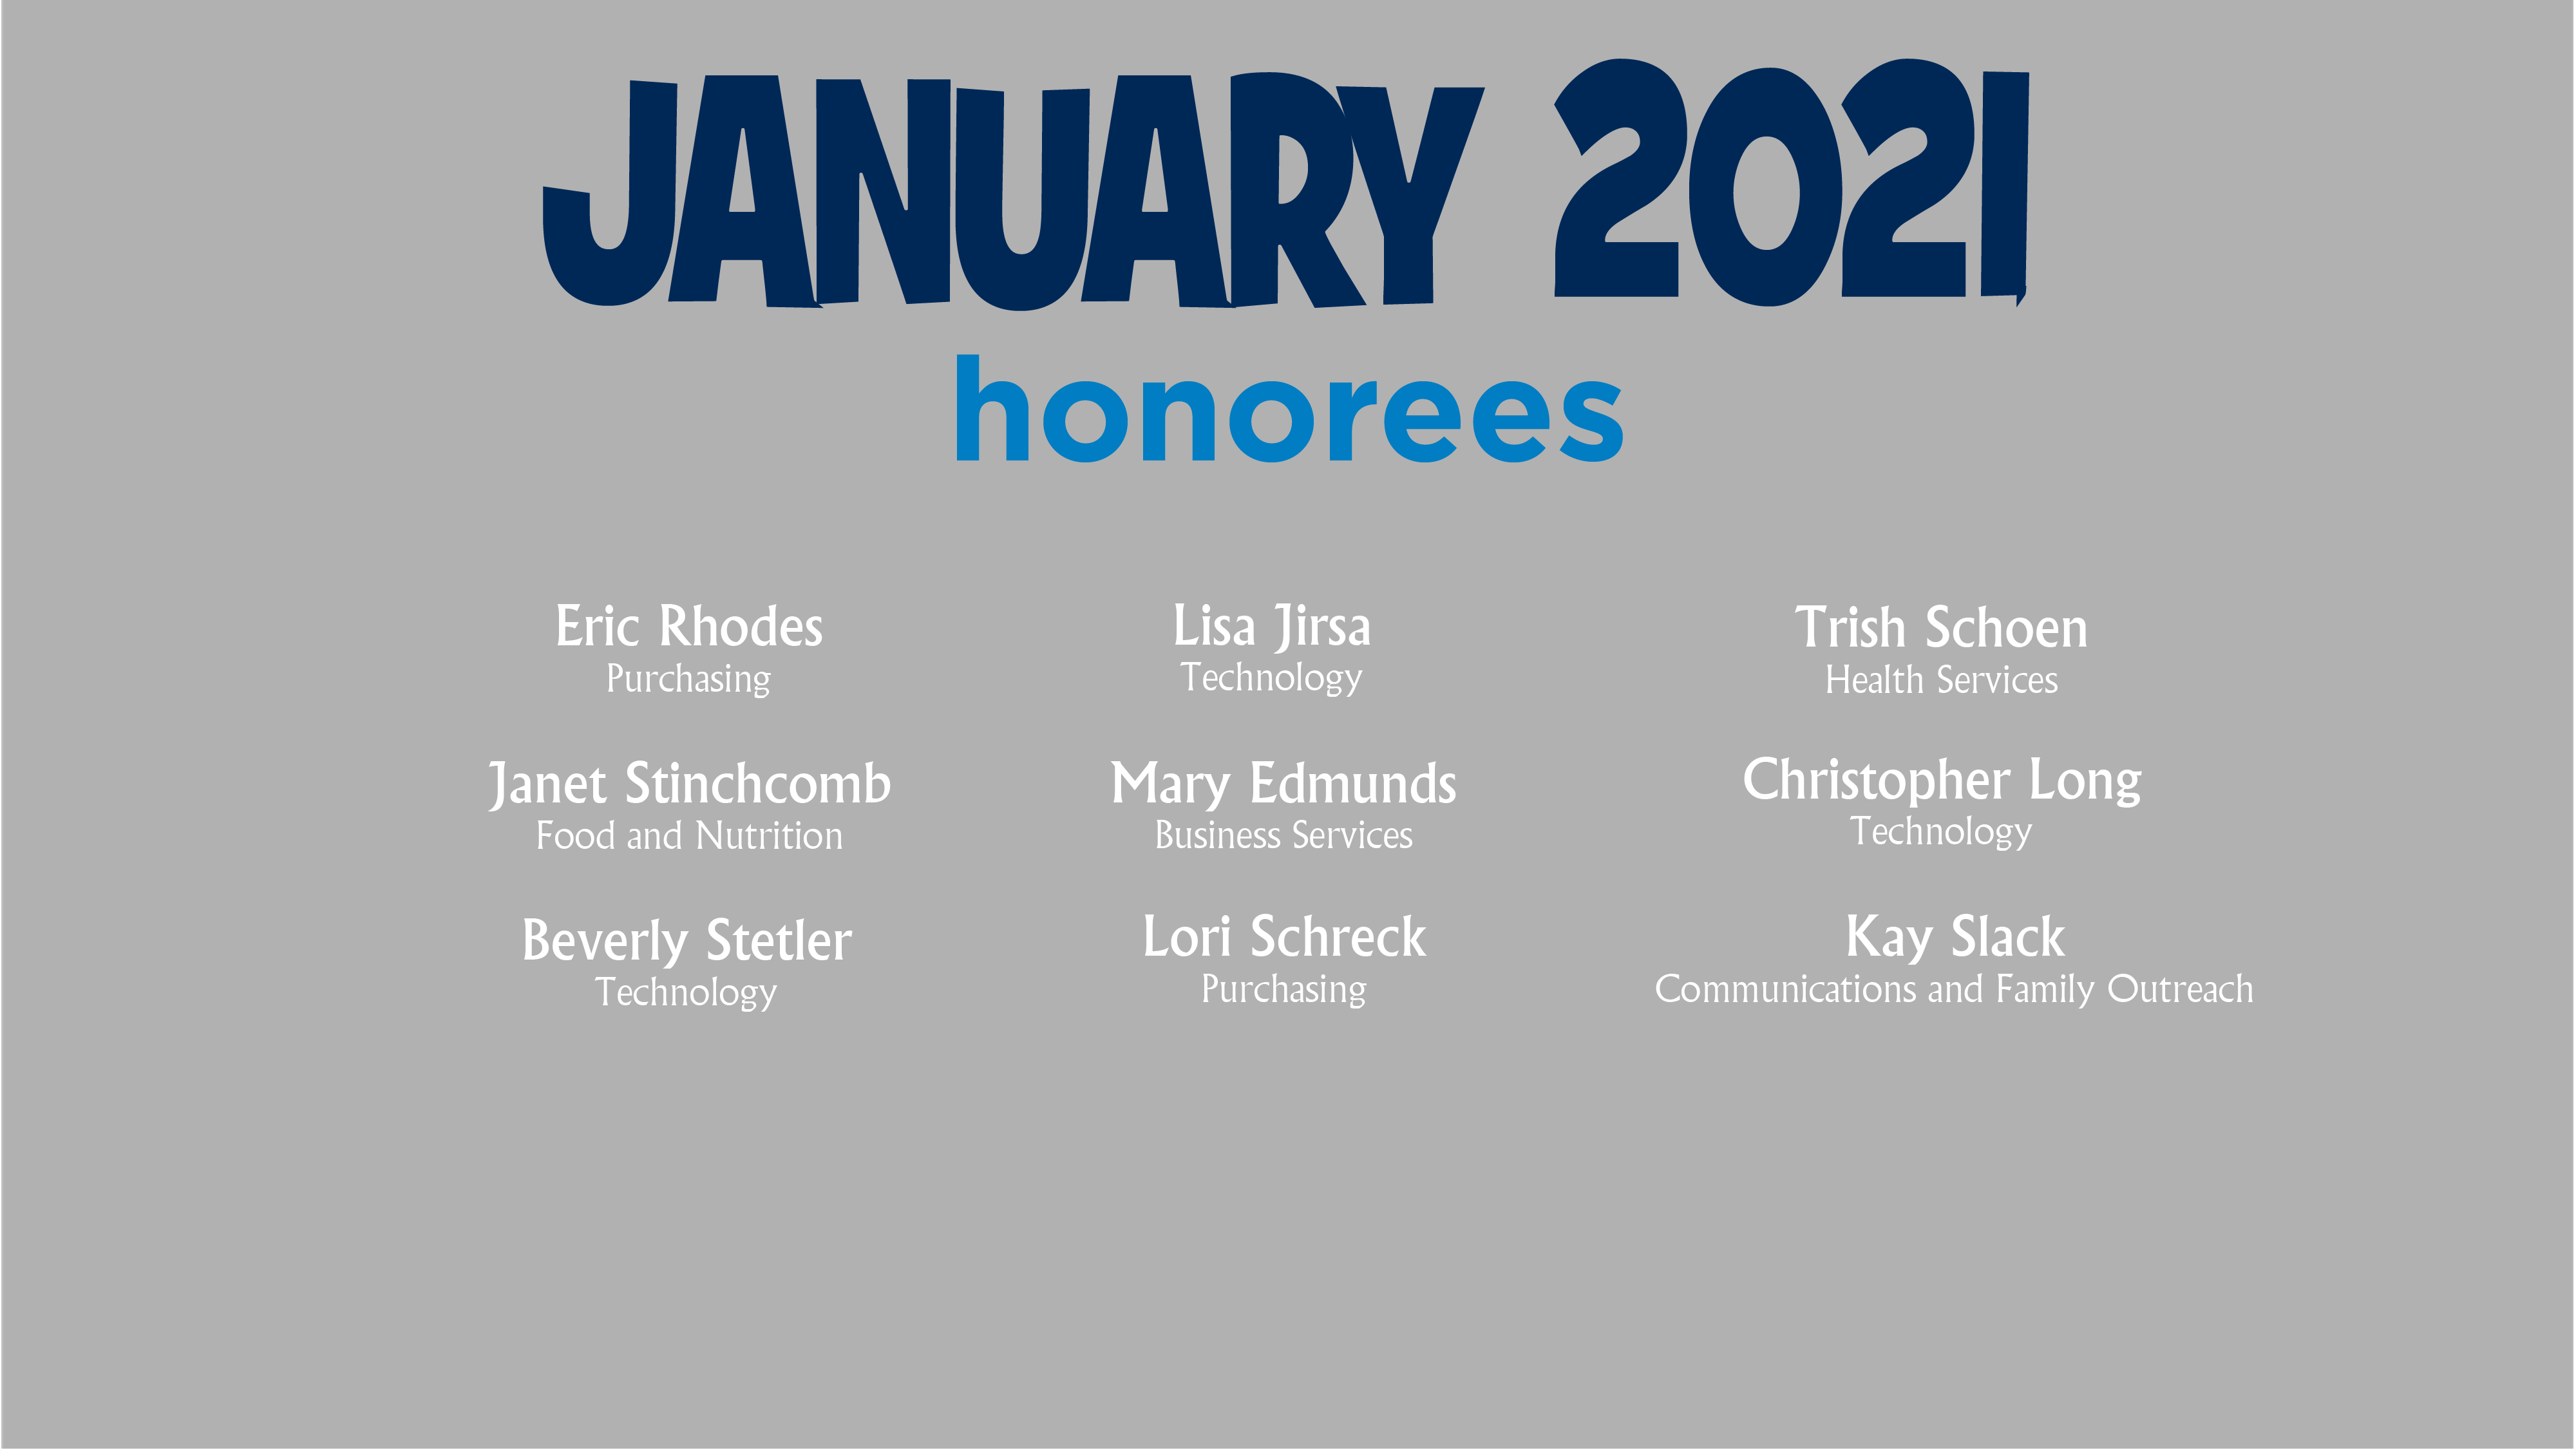 HCPS Bowtie Breakfast Honorees - January 2021